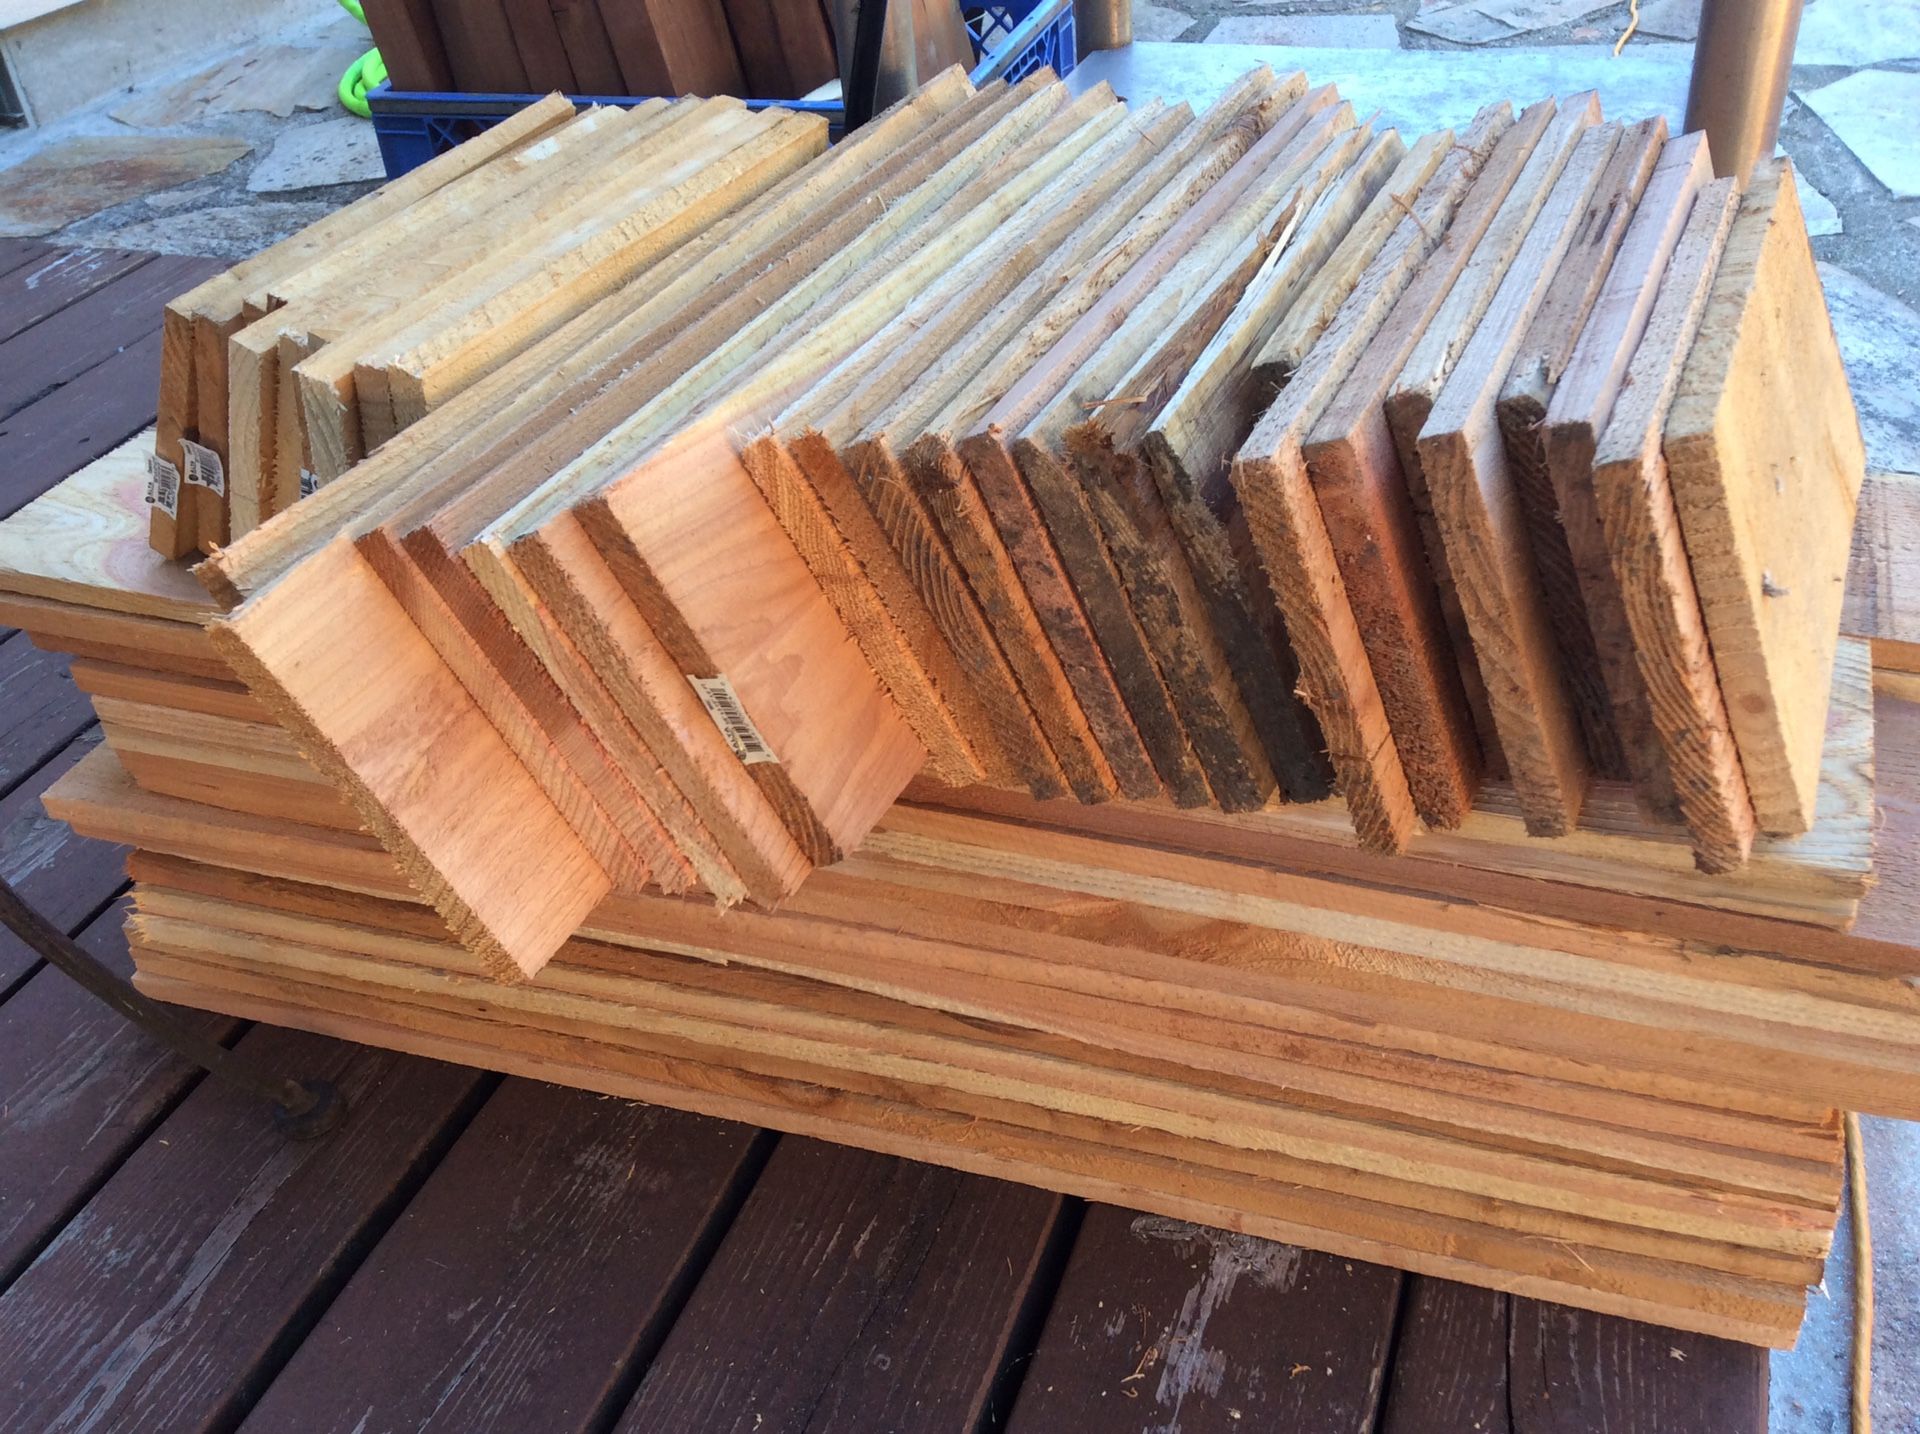 Cedar boards, untreated